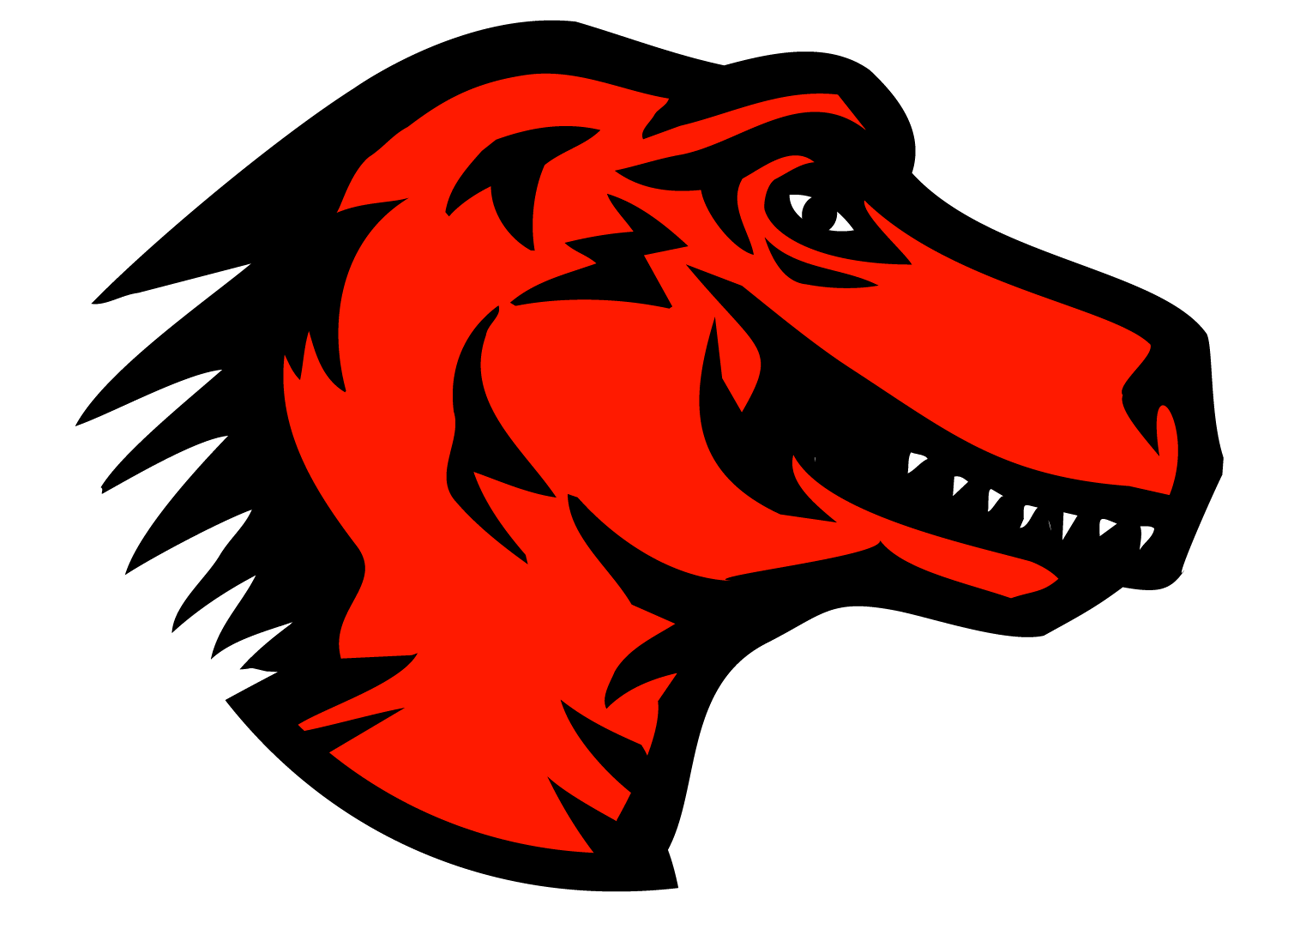 Mozilla Firefox Old Logo - File:Mozilla dinosaur head logo.png - Wikimedia Commons